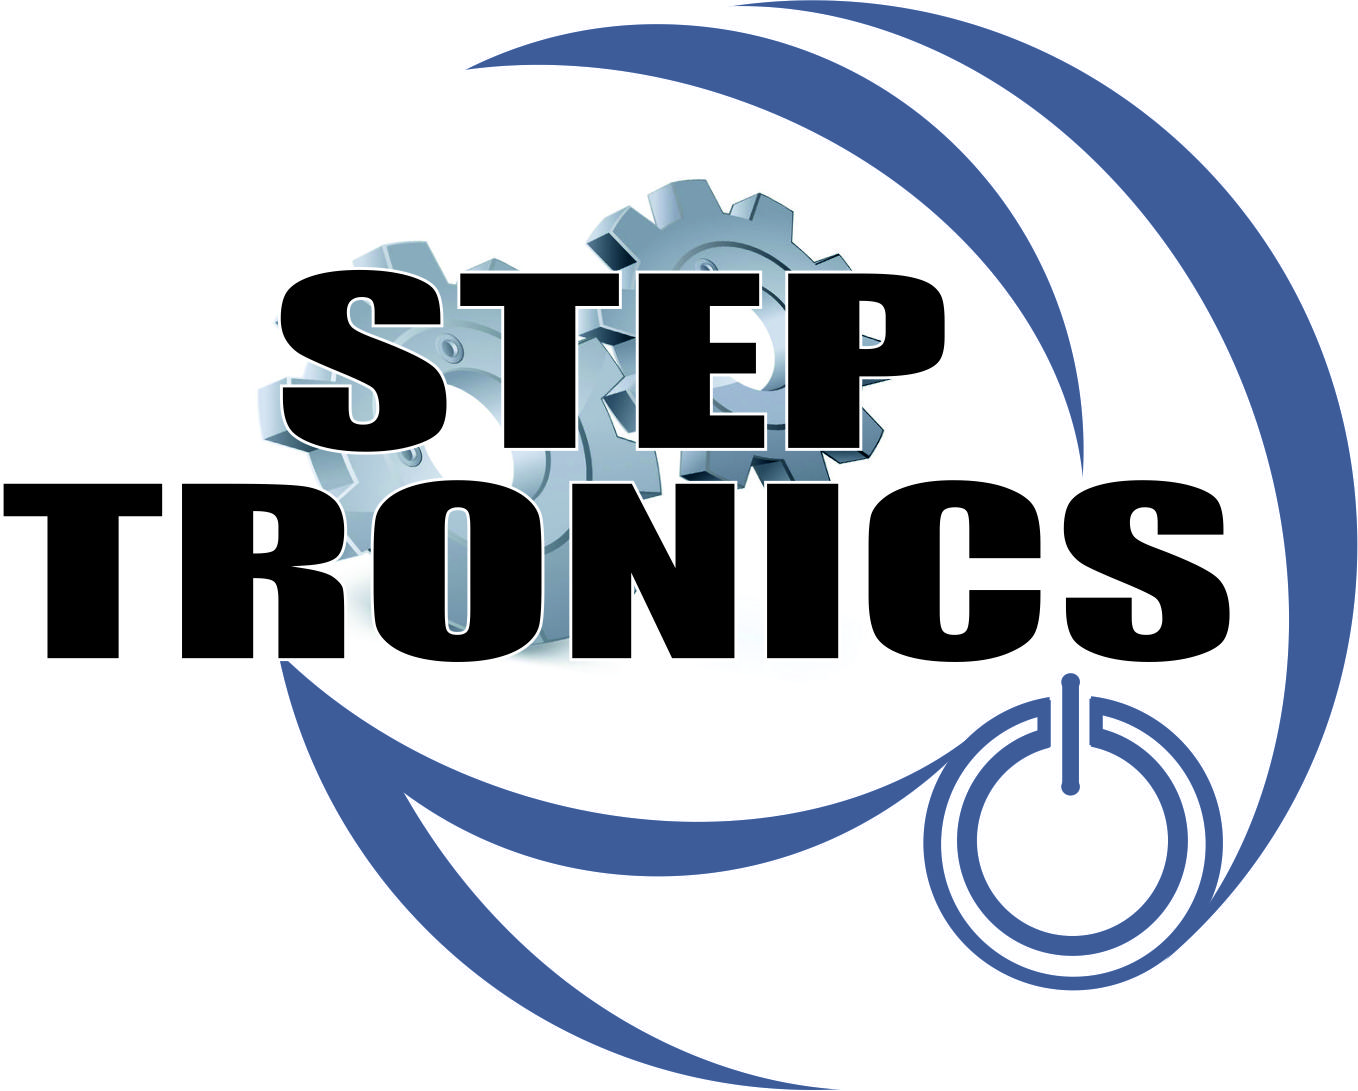 Steptronics